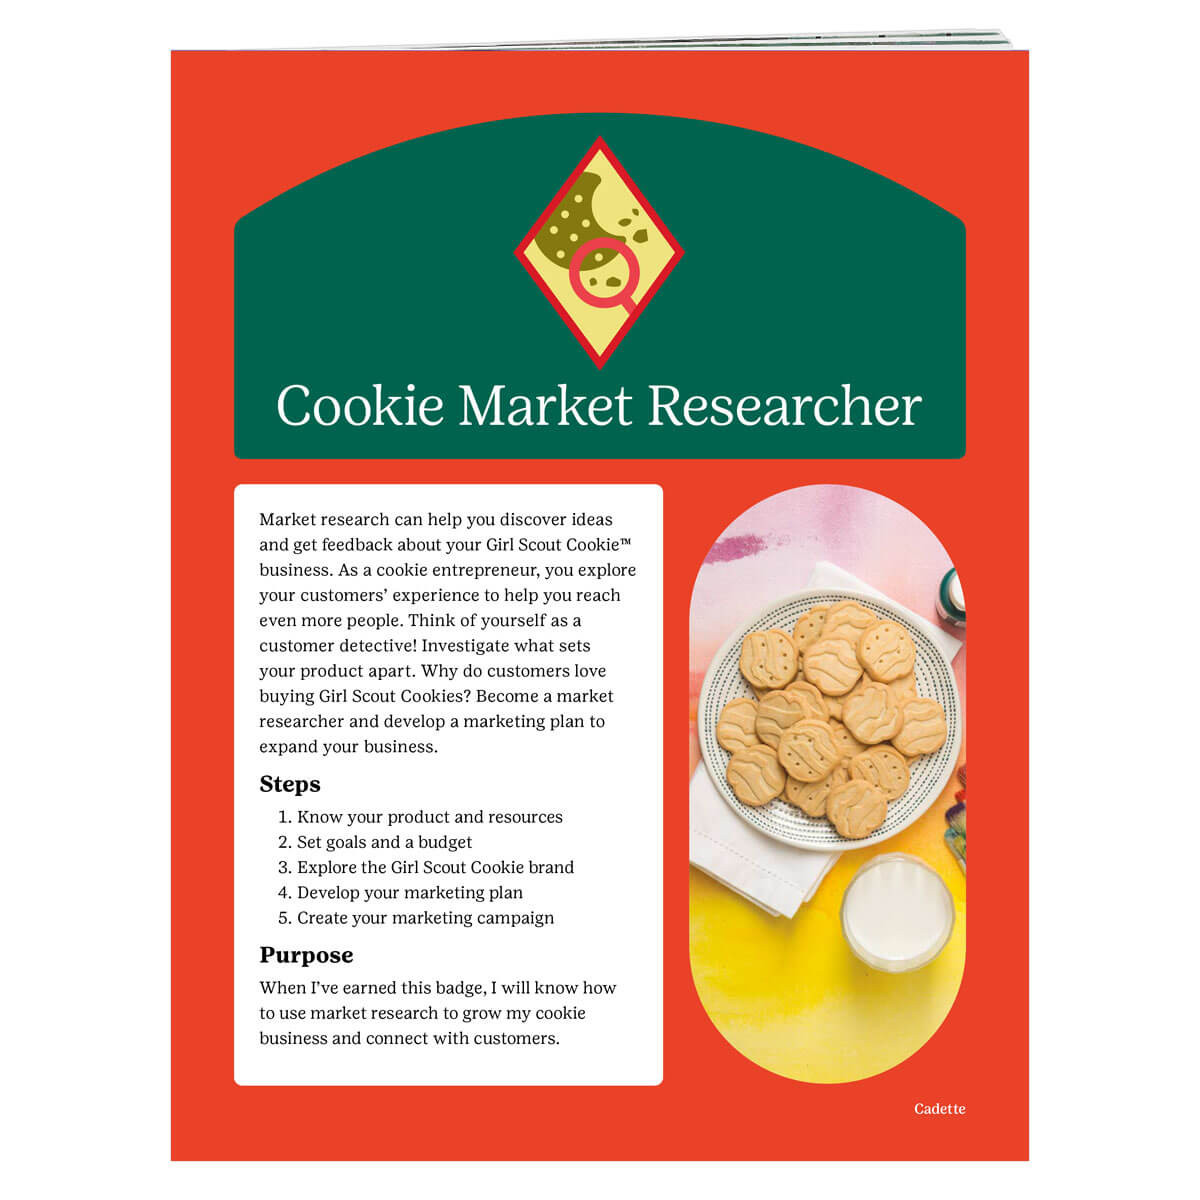 Cookie Market Researcher Badge Requirements